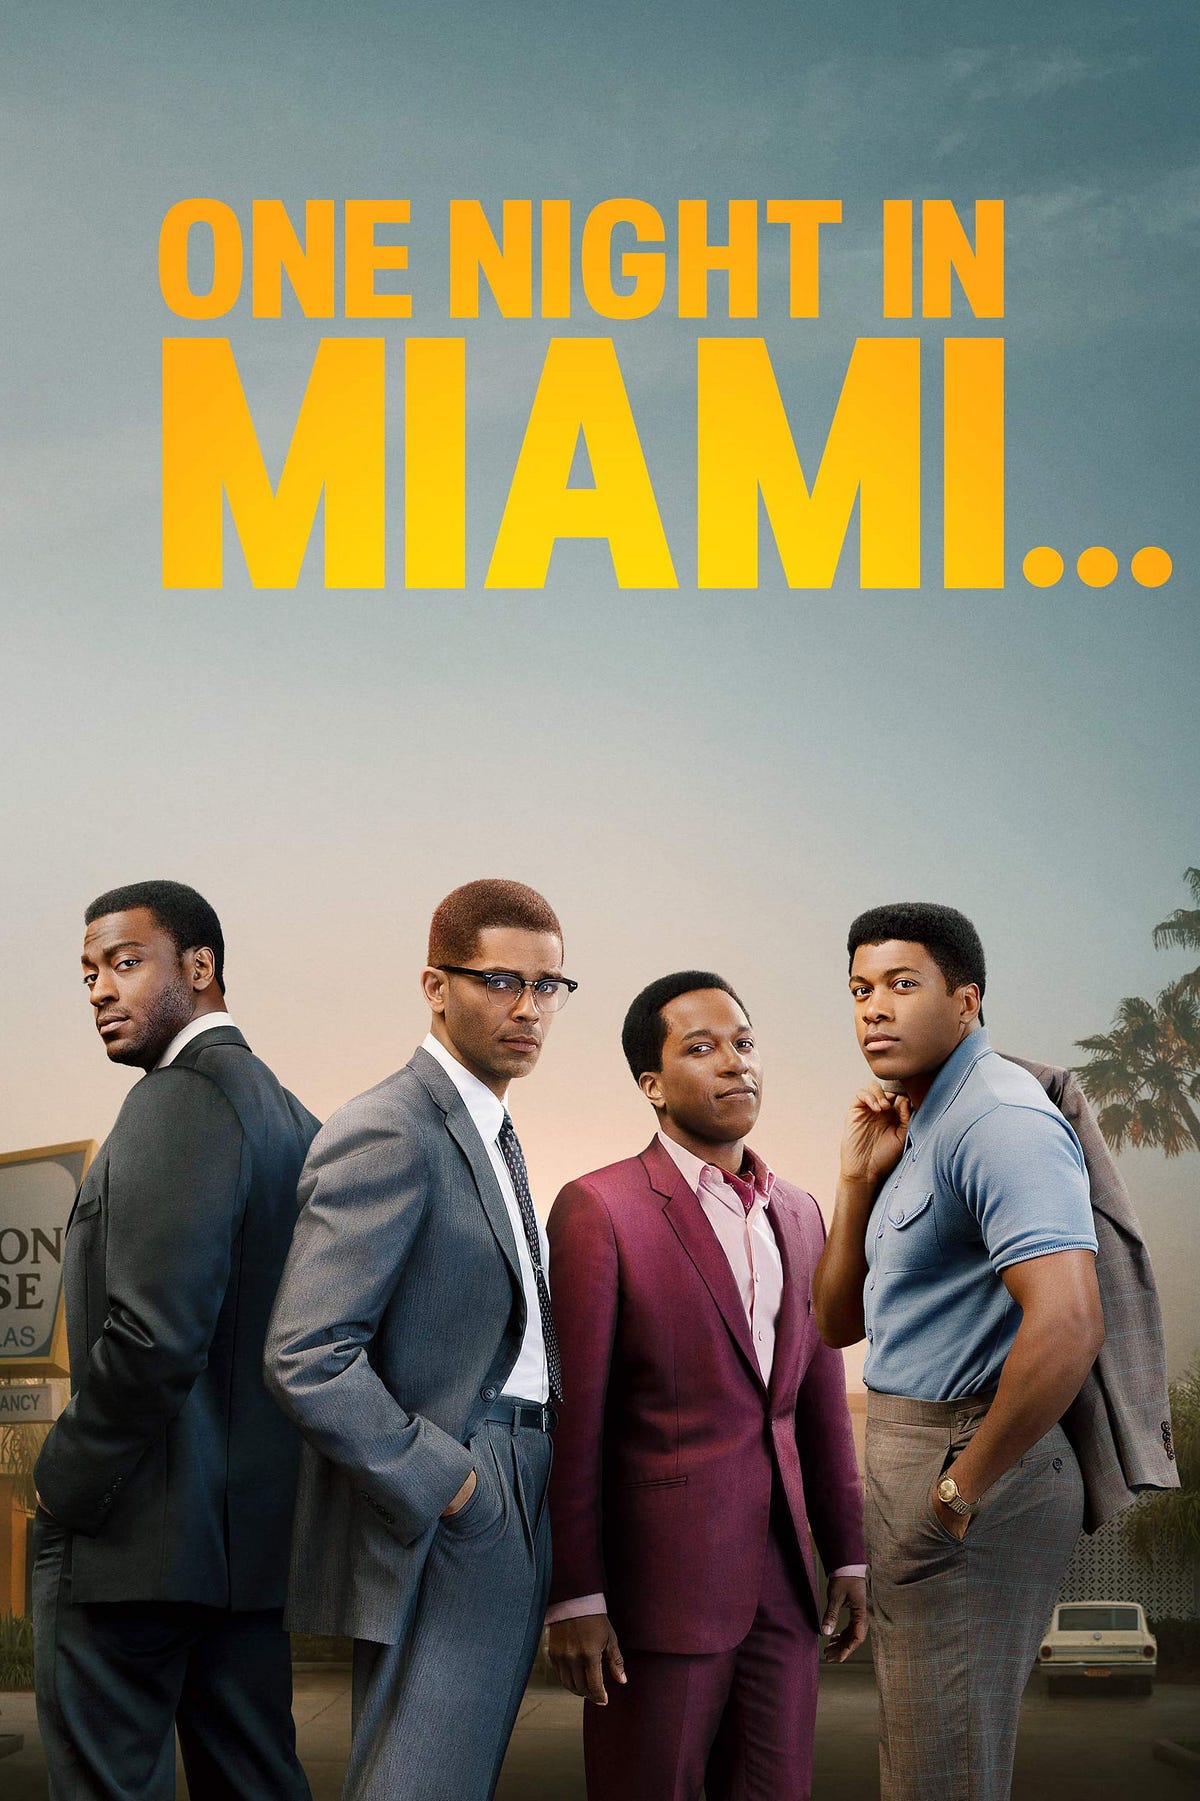 "One Night in Miami : 2020" | FULL MOVIE (HD 1080p) | One ...